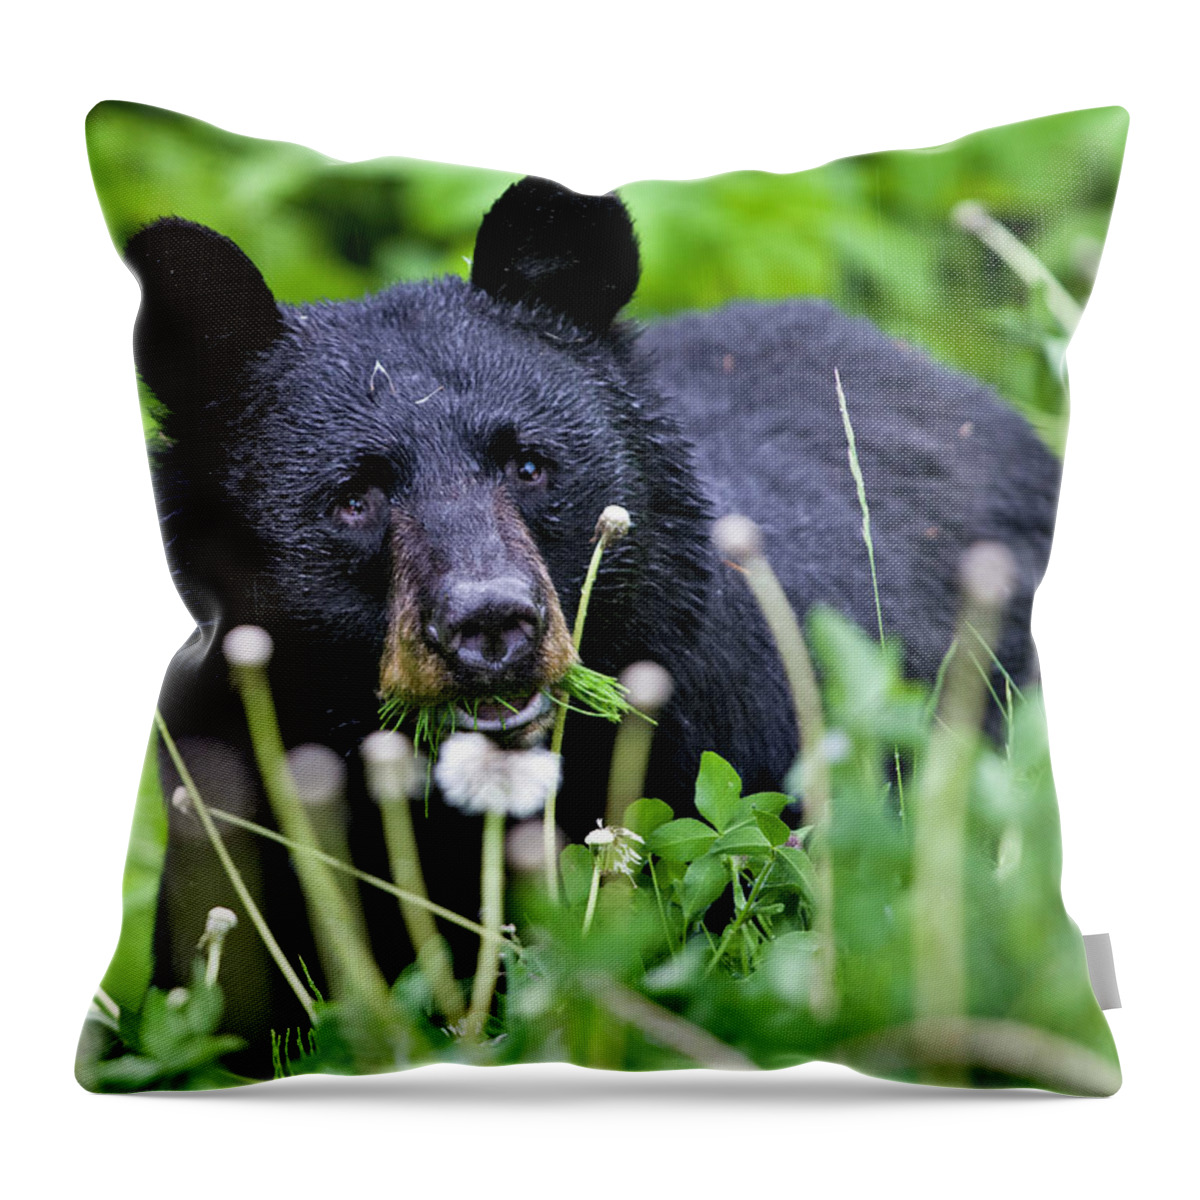 Bear Throw Pillow featuring the photograph Dandelion Salad by Paul Riedinger